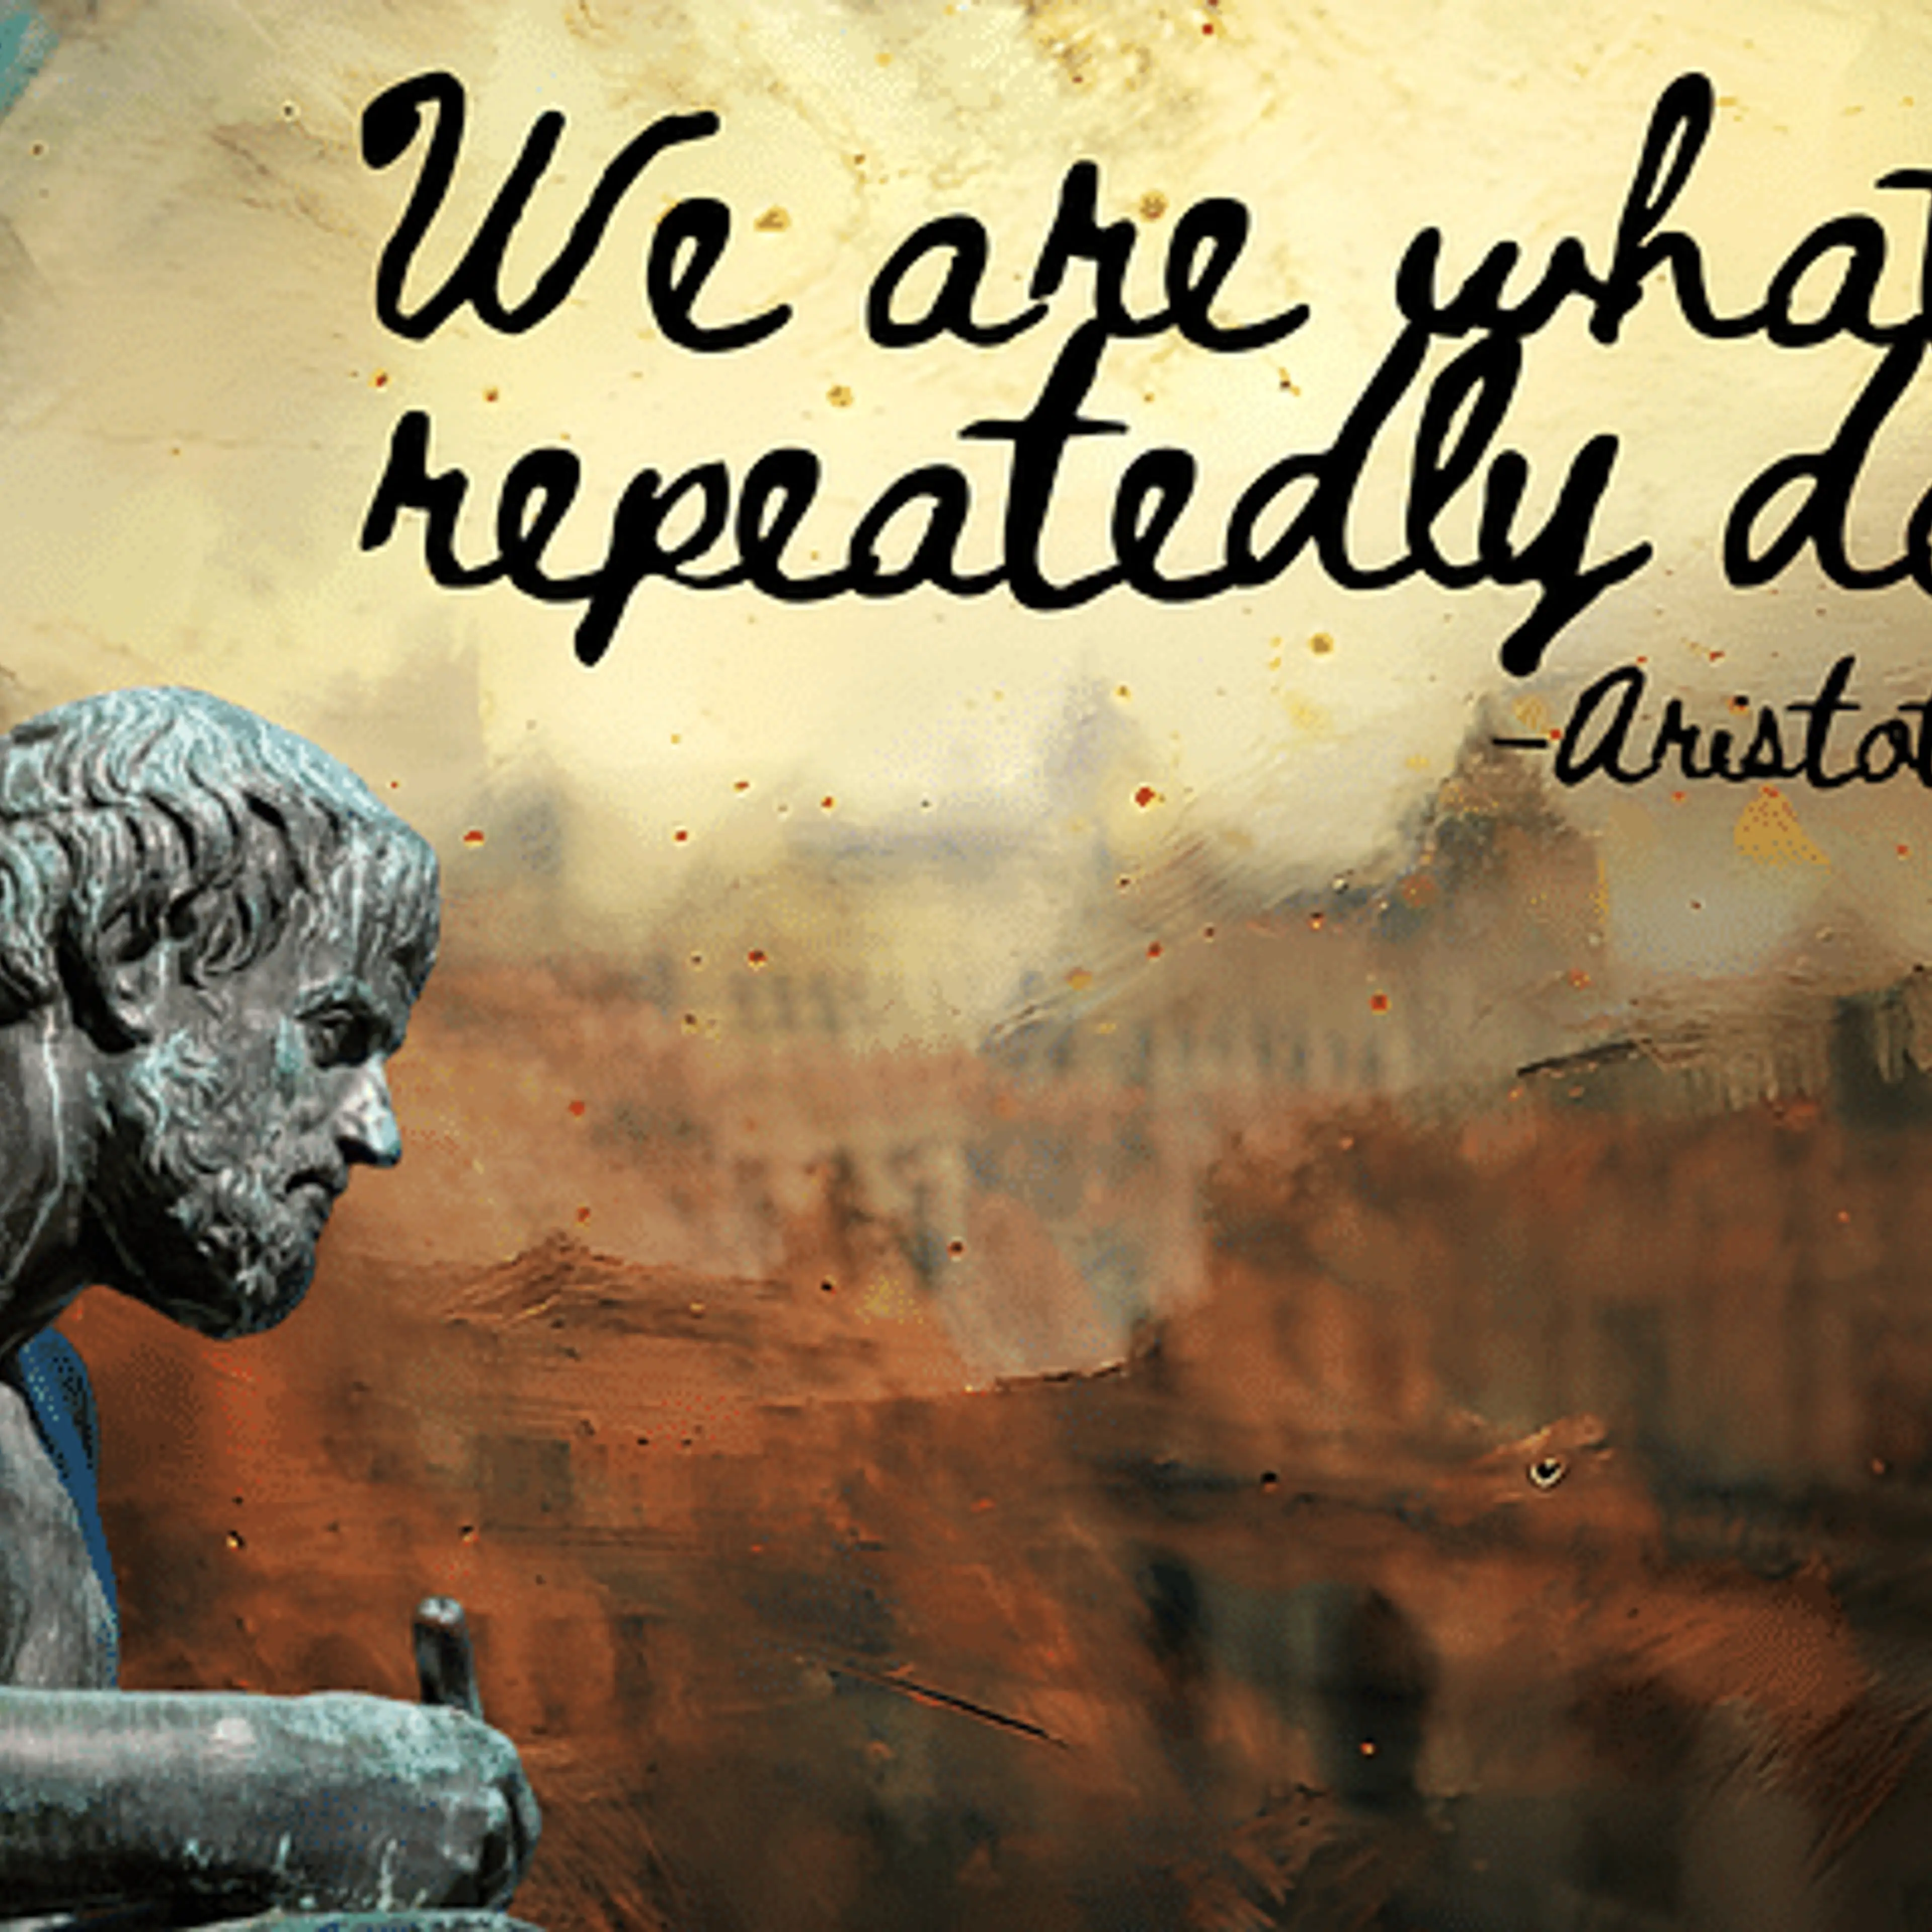 Master self-discipline with Aristotle's timeless wisdom